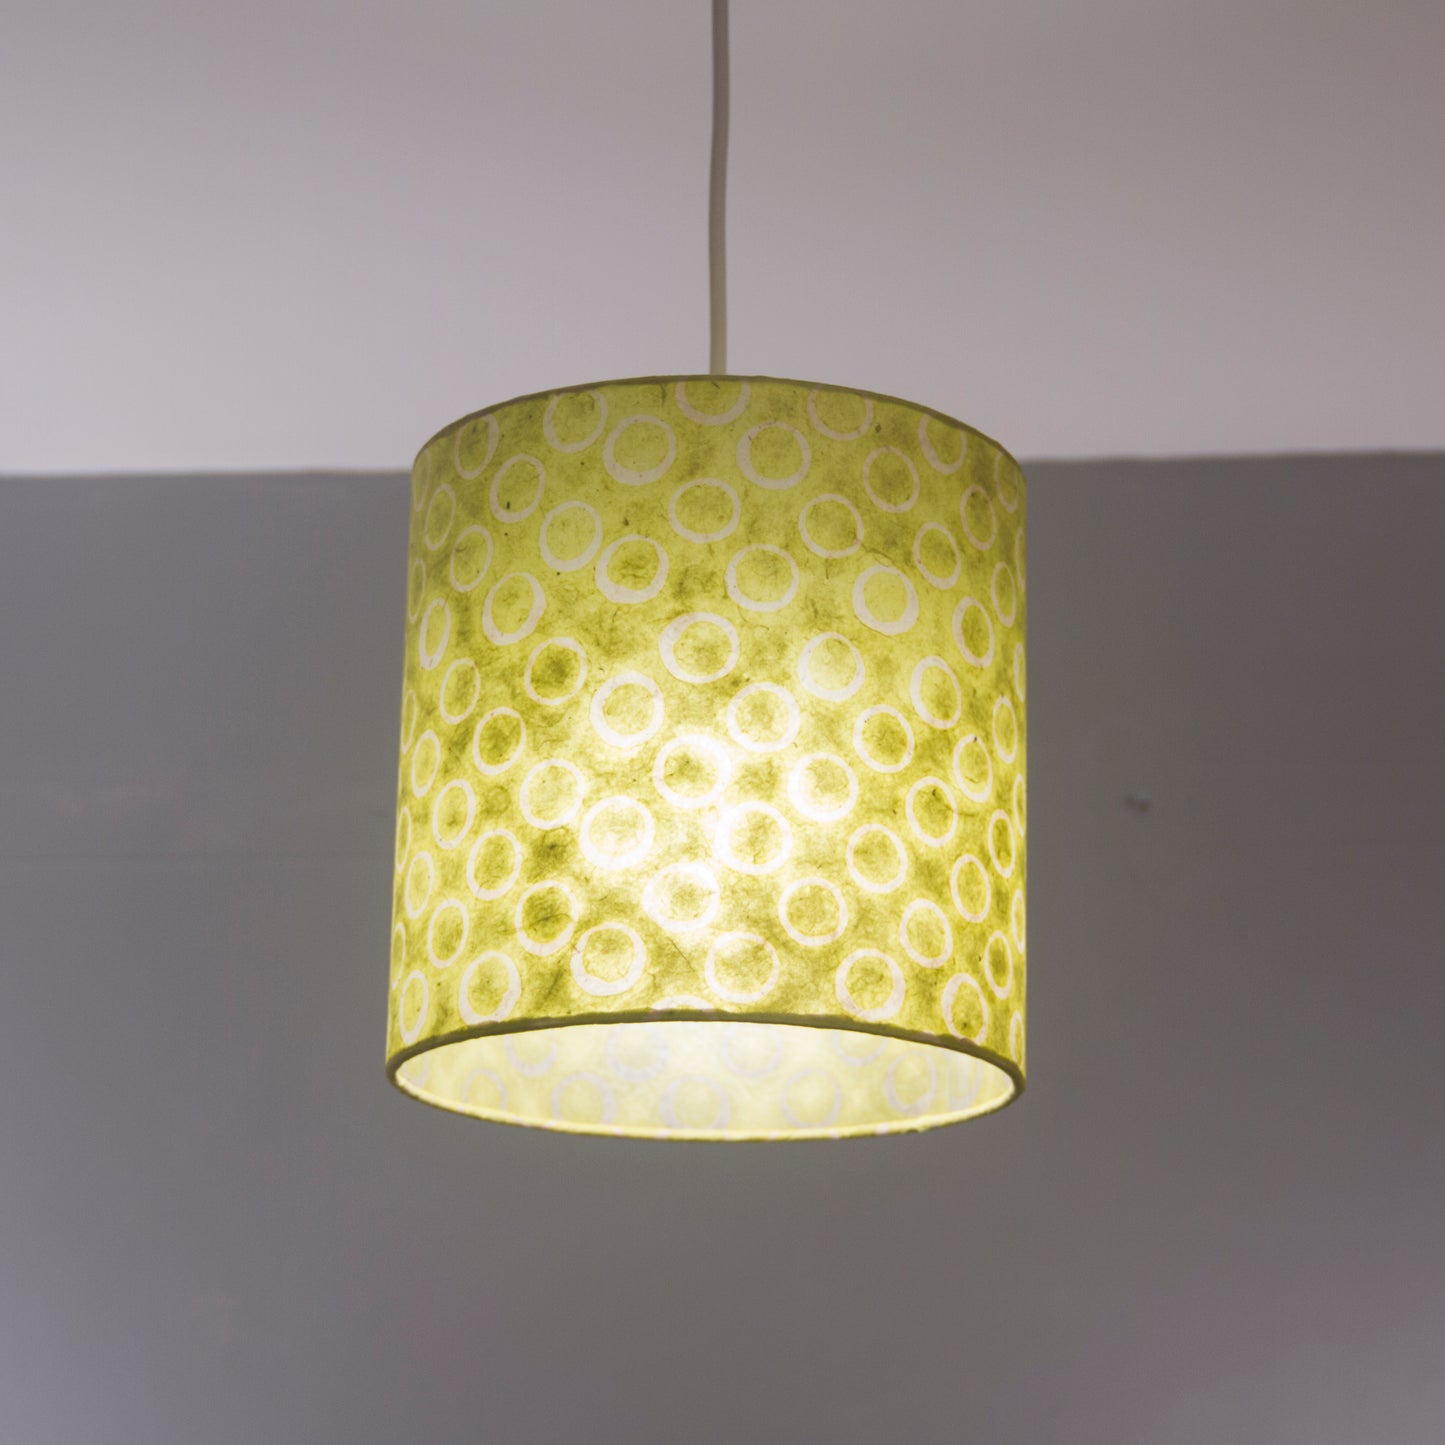 Oval Lamp Shade - P02 - Batik Lime Circles, 30cm(w) x 30cm(h) x 22cm(d)